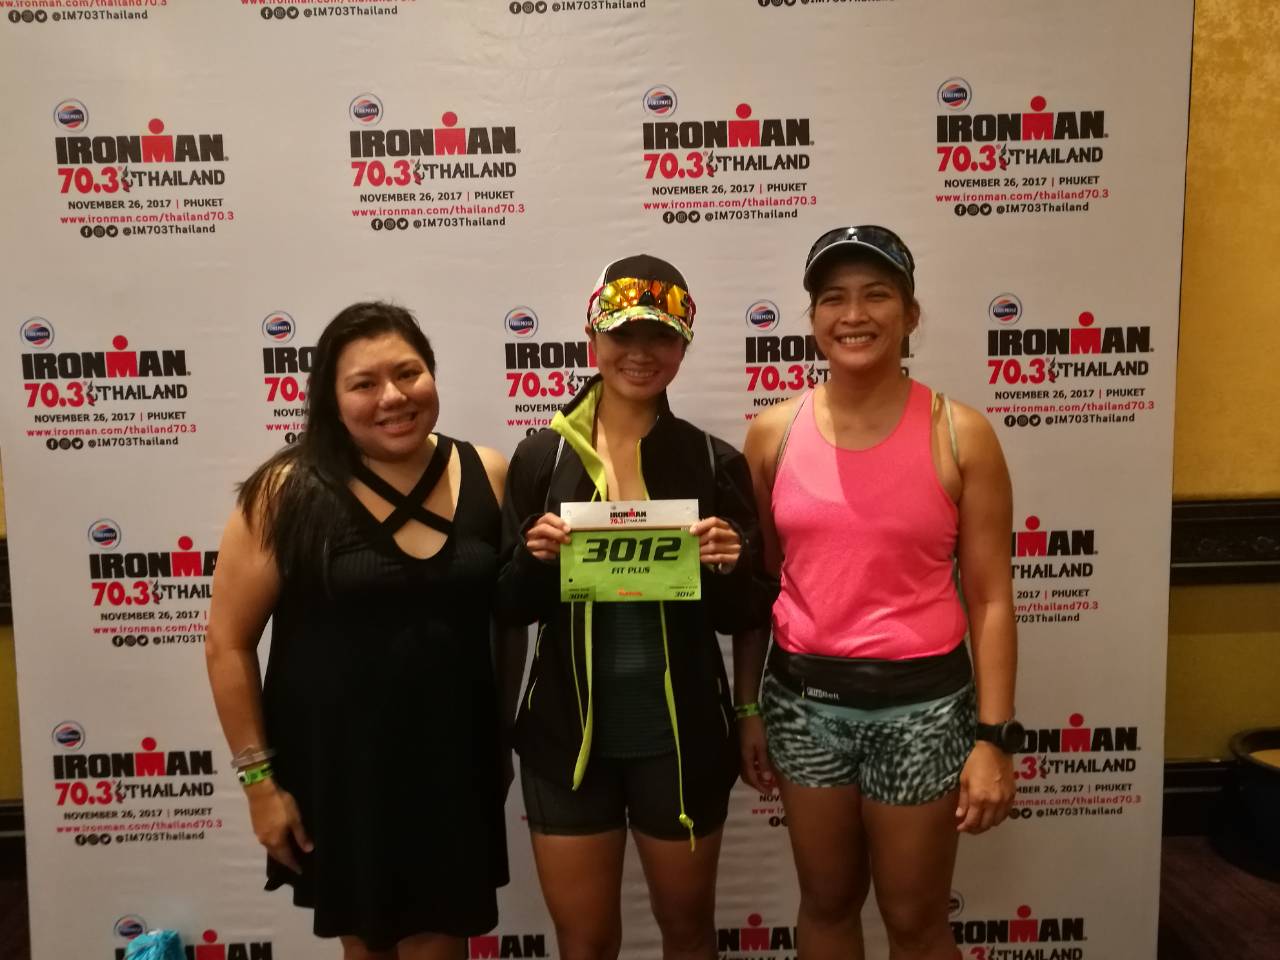 Female triathletes Joanne Raquel, Kaye Lopez, and Glenda Evangelista